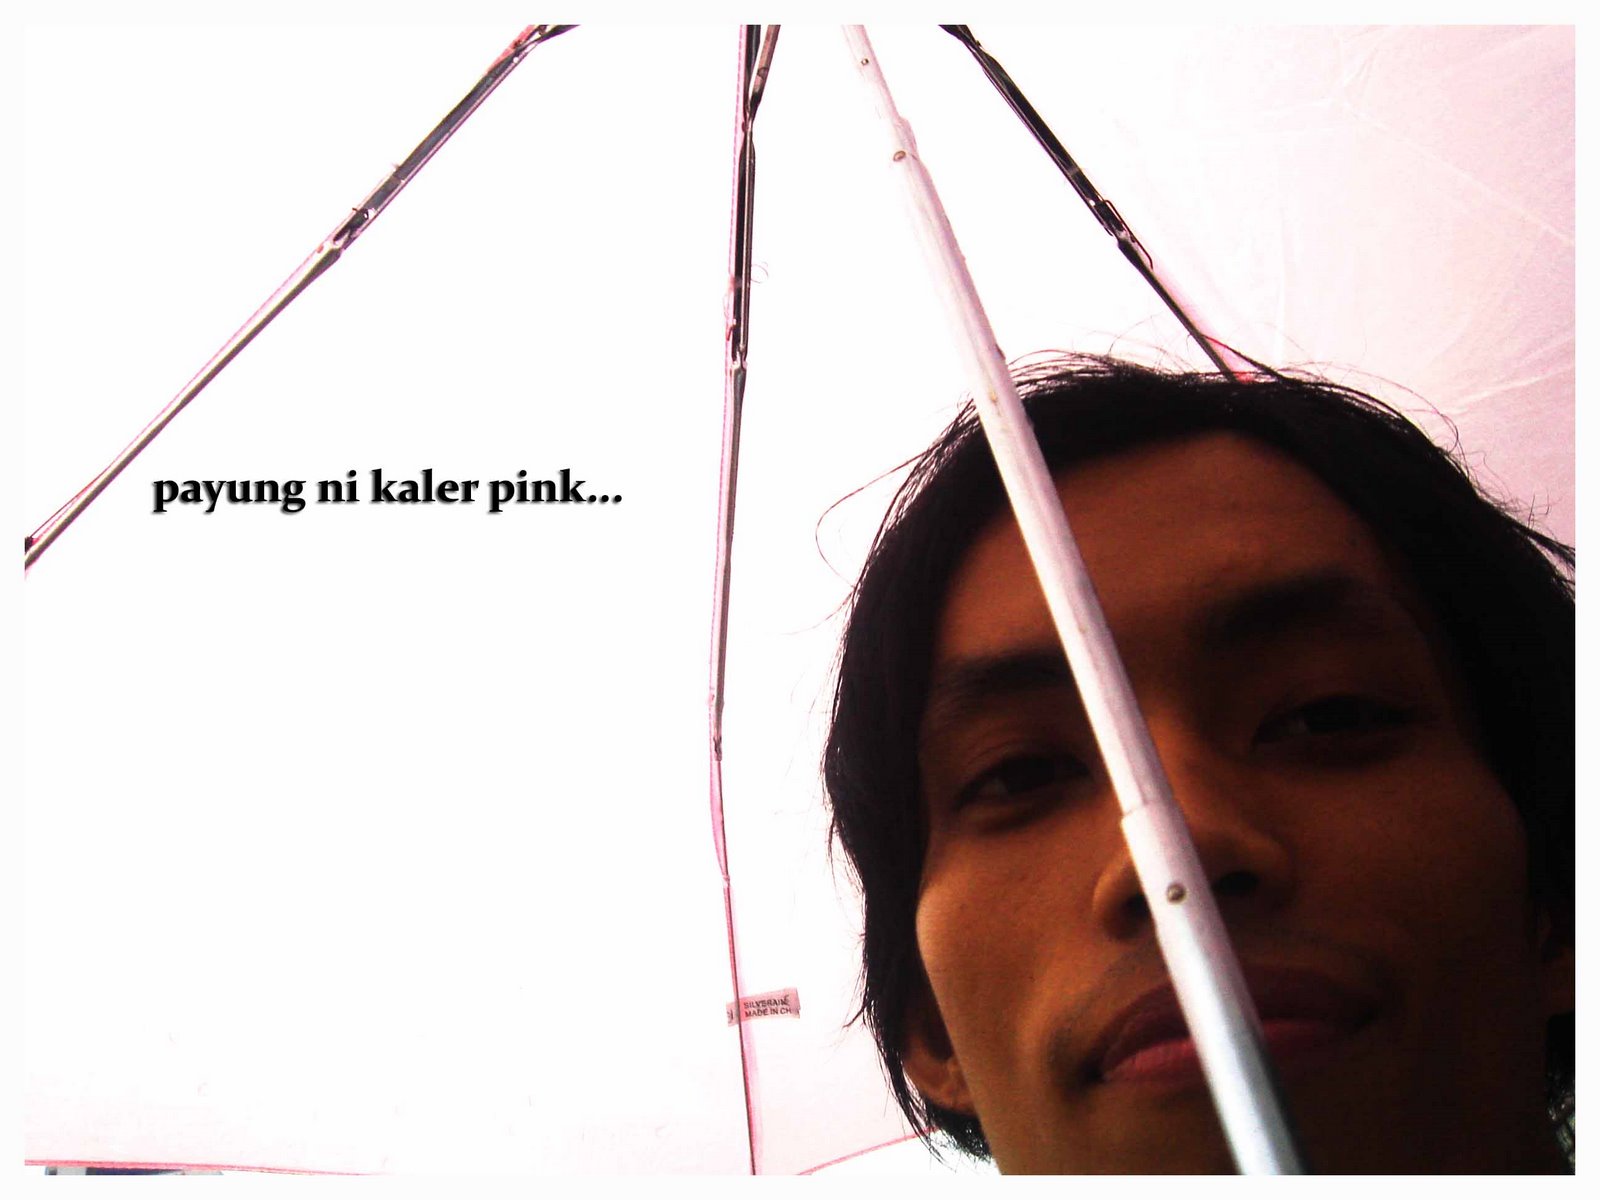 [payung.jpg]